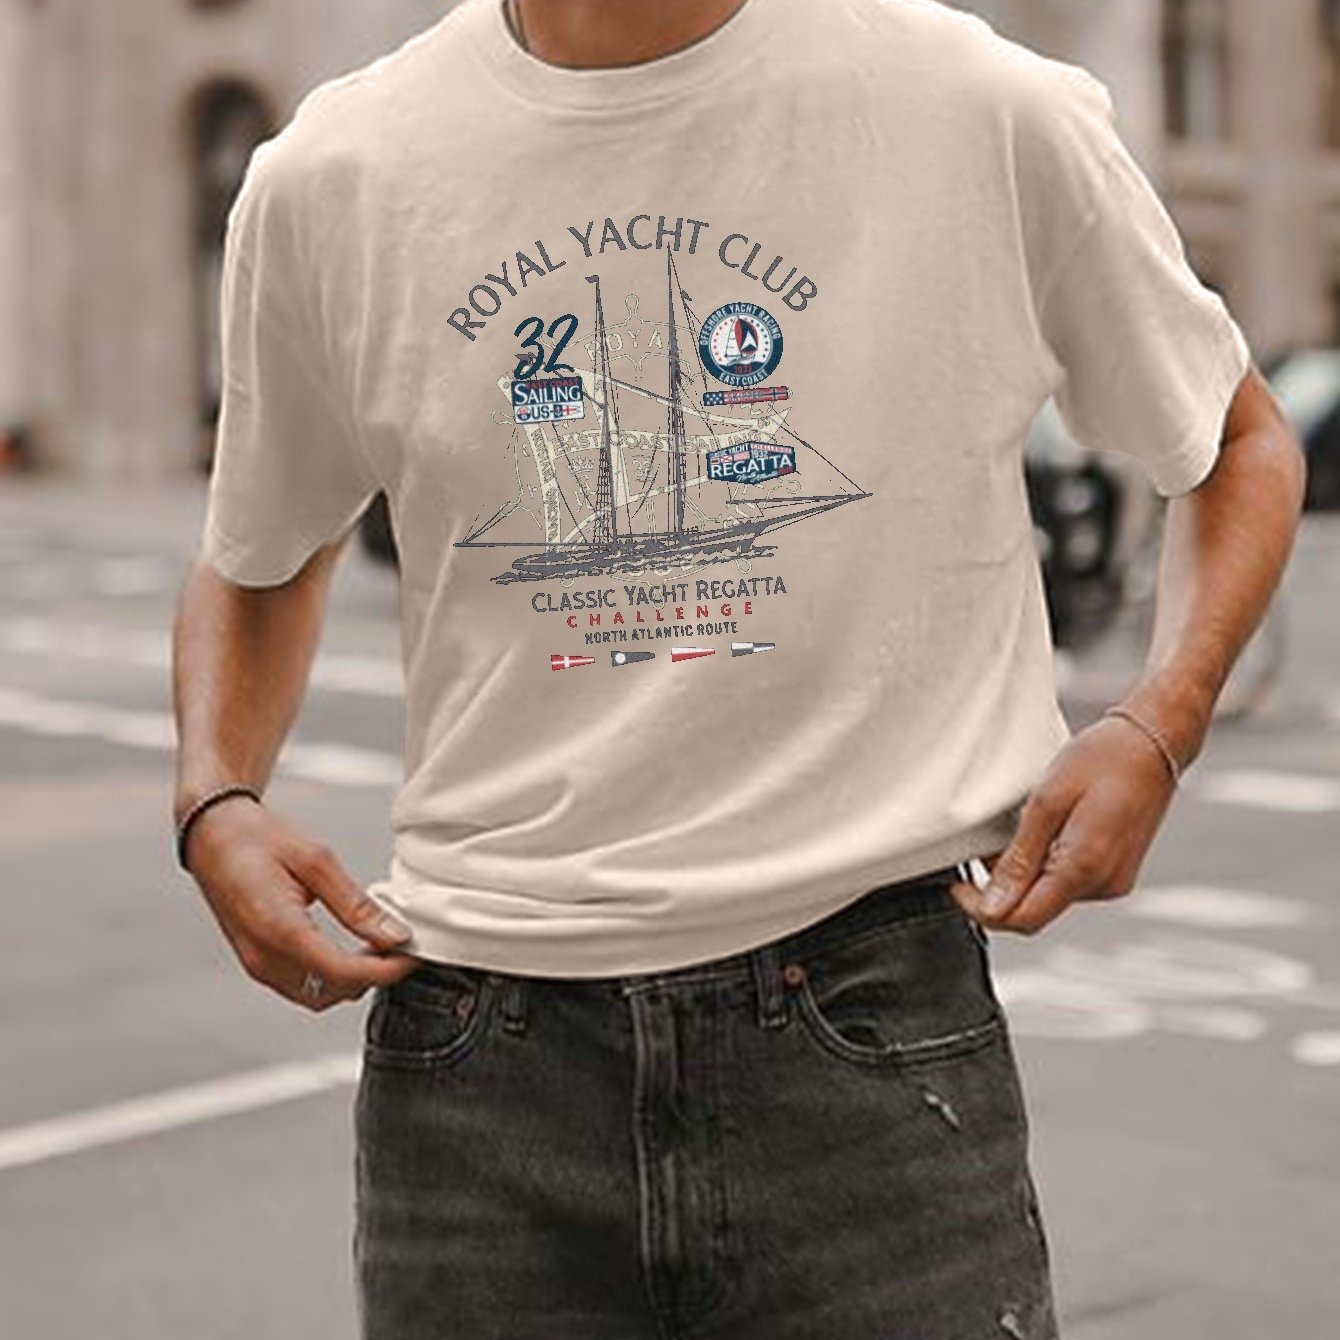 Royal Yacht Club Print T Shirt, T-Shirts, Tees for Men, Casual Short Sleeve T-Shirt for Summer,Casual,Temu